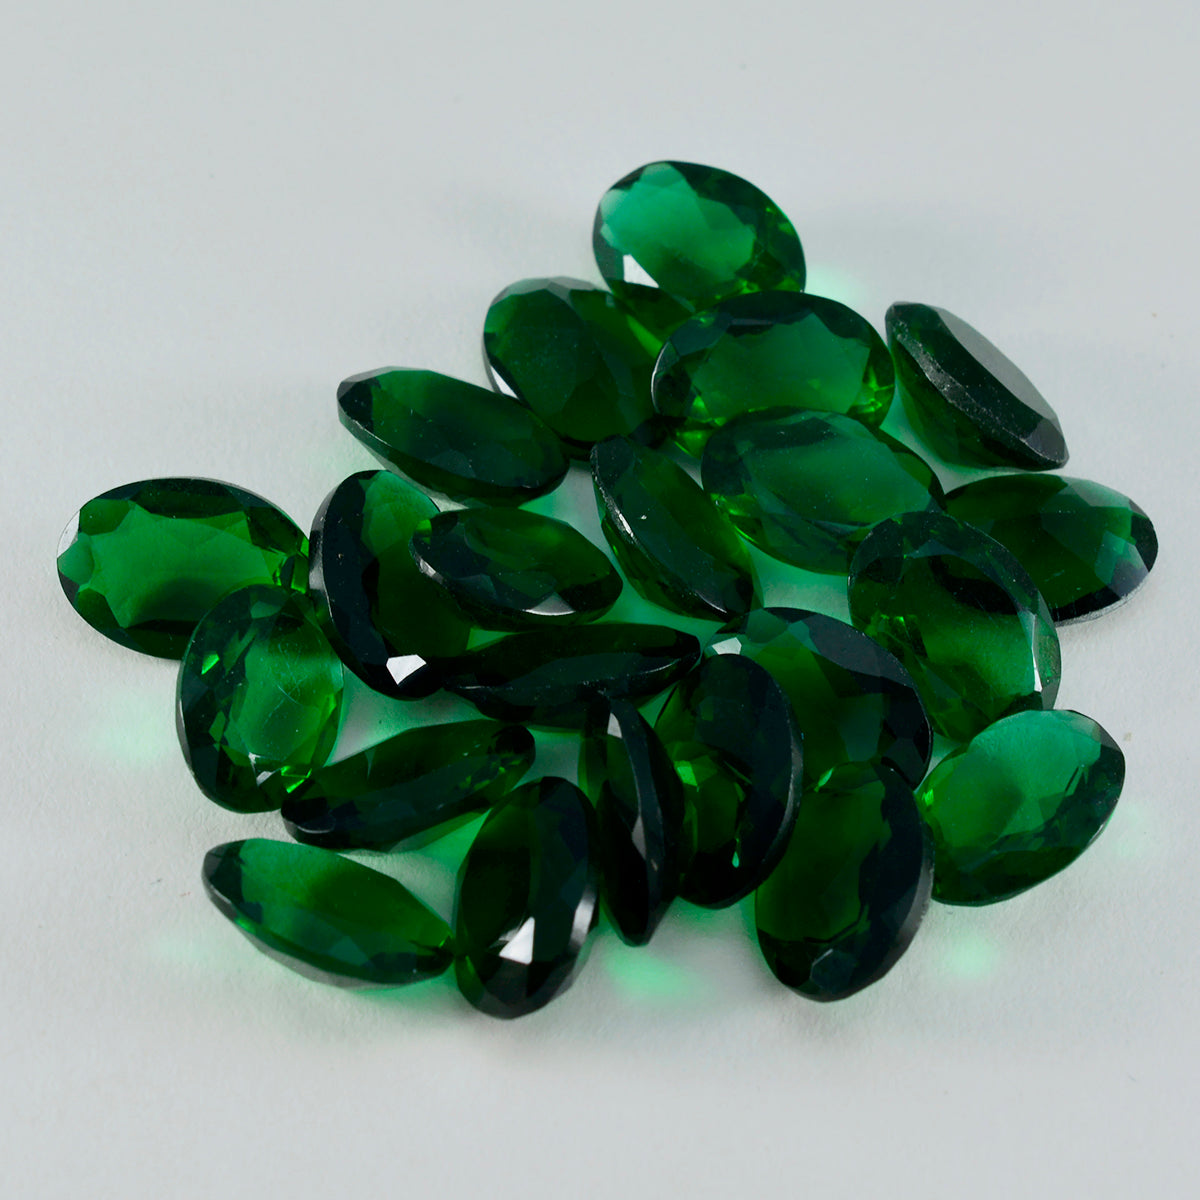 Riyogems 1PC Green Emerald CZ Faceted 8x10 mm Oval Shape good-looking Quality Gems